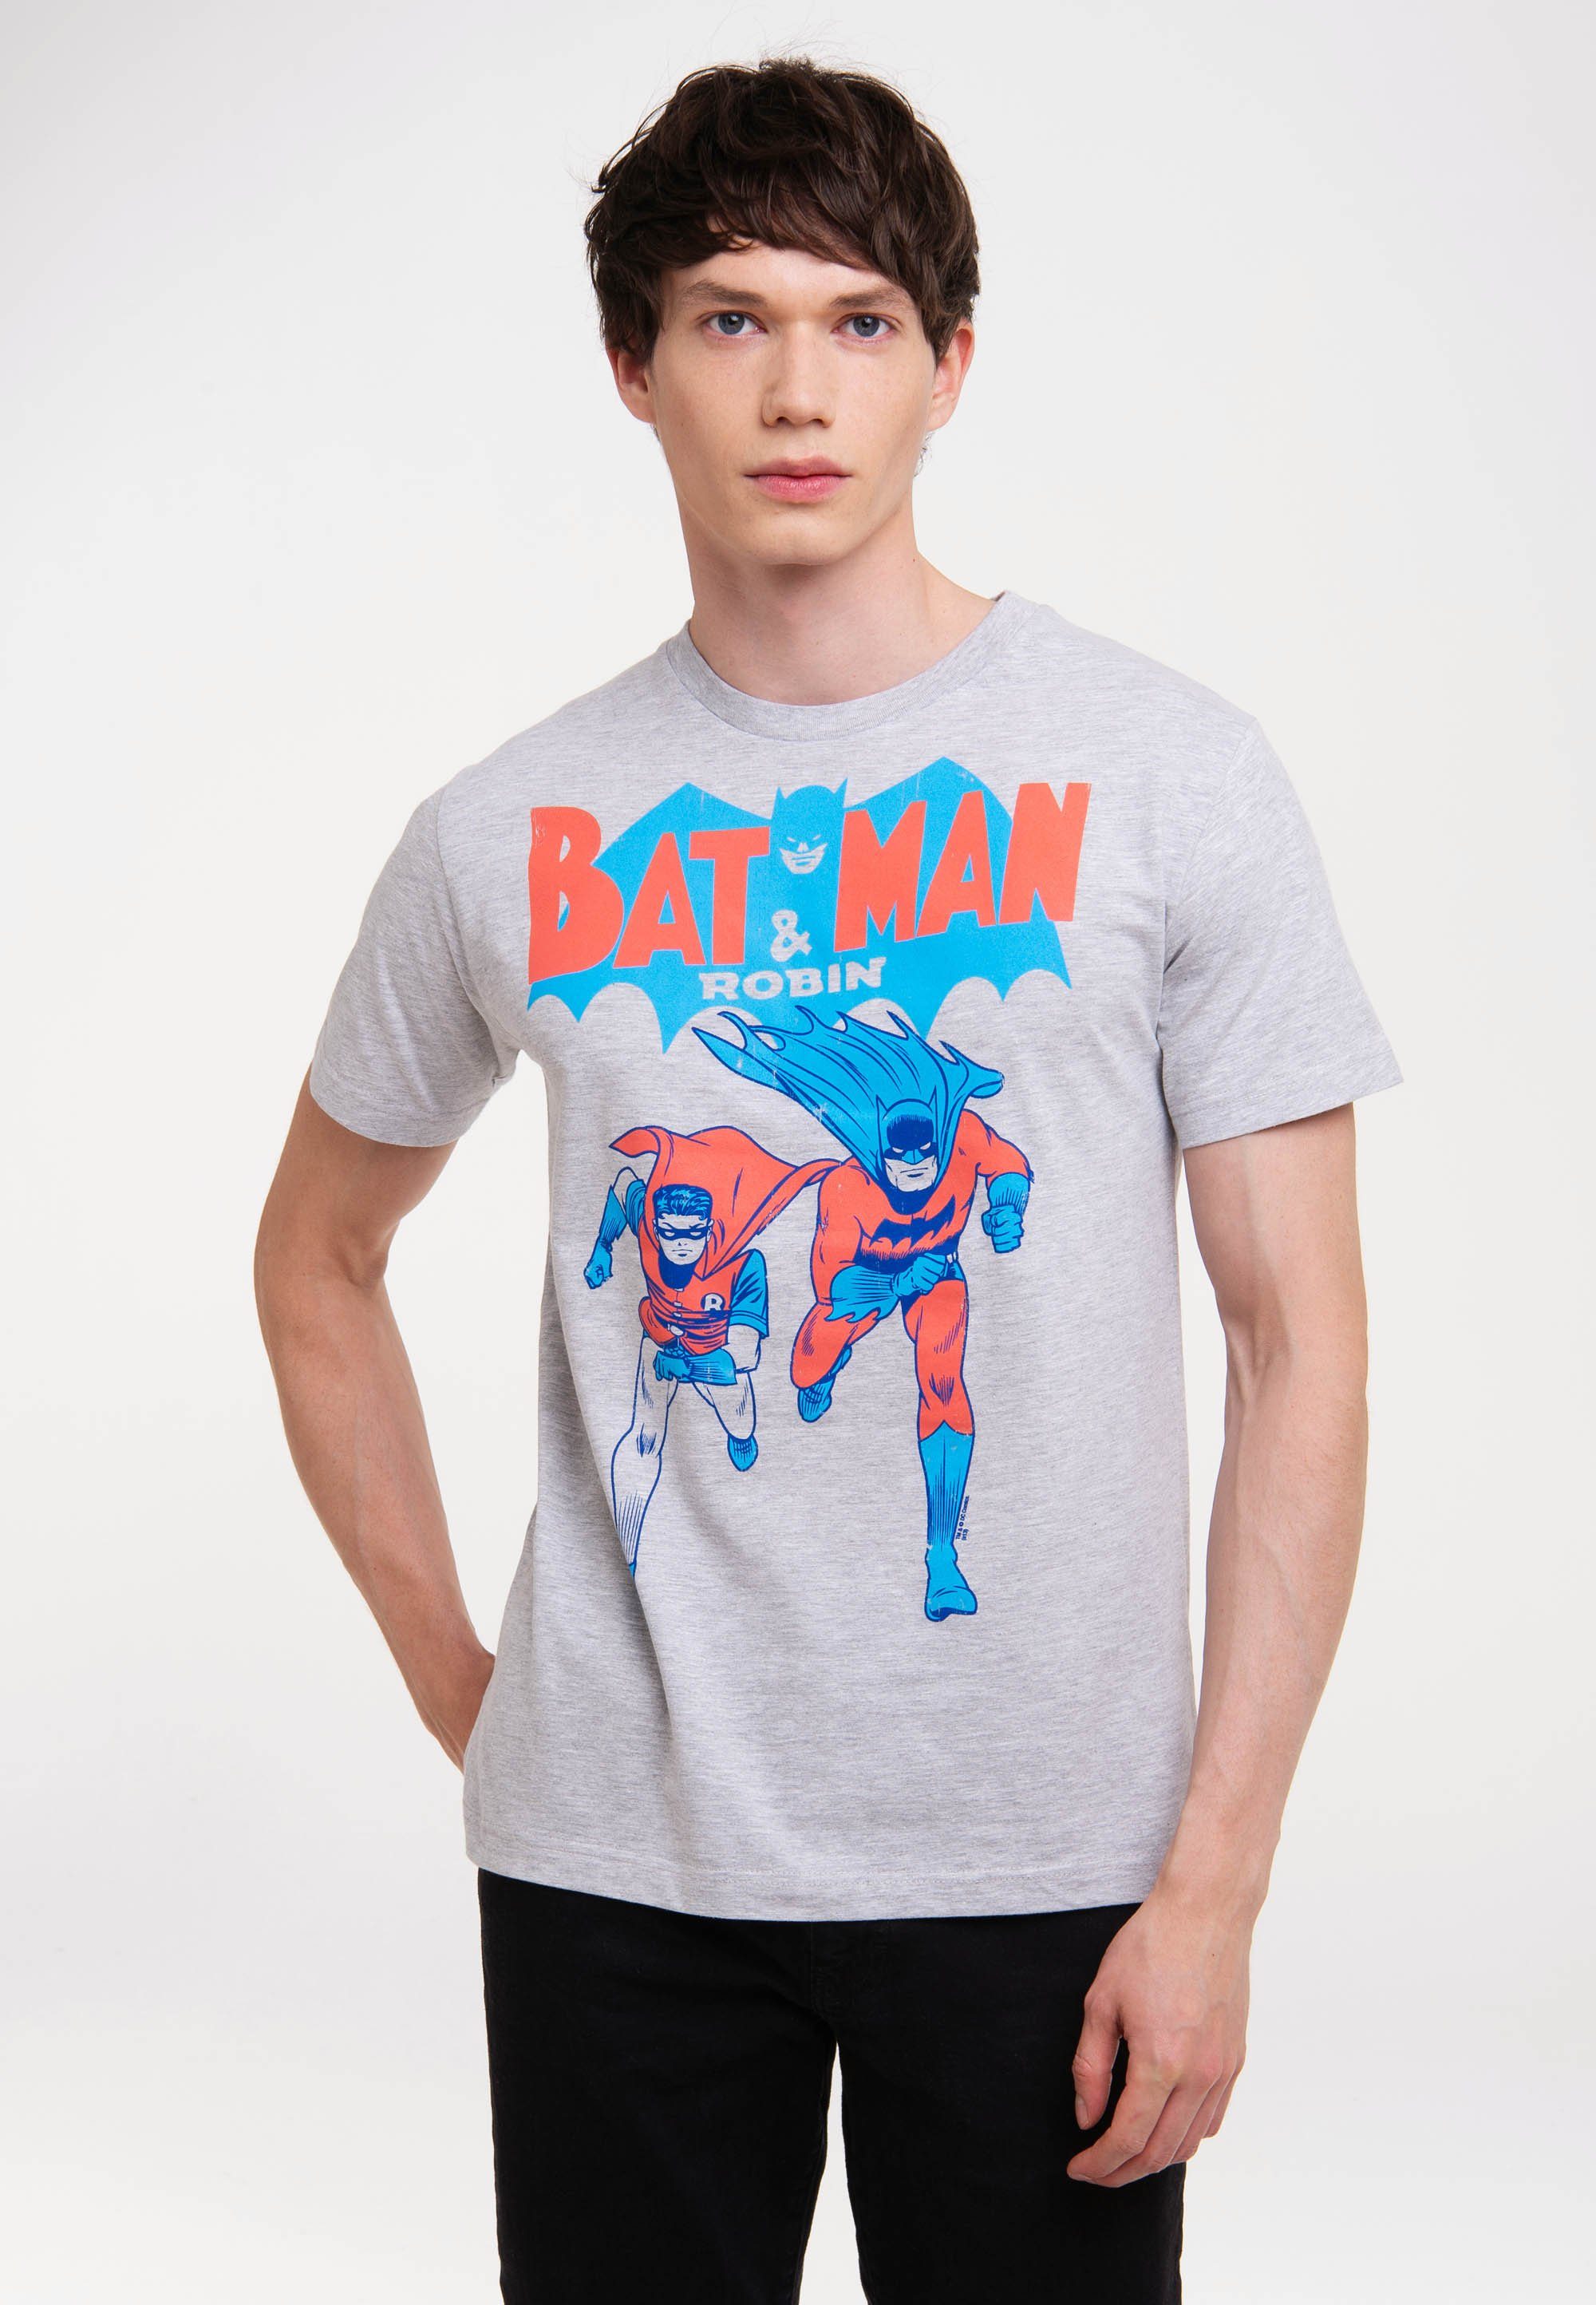 LOGOSHIRT T-Shirt BATMAN hochwertig Frontprint, coolem ROBIN Siebdruck Mit Printed AND in - langlebigem mit Germany